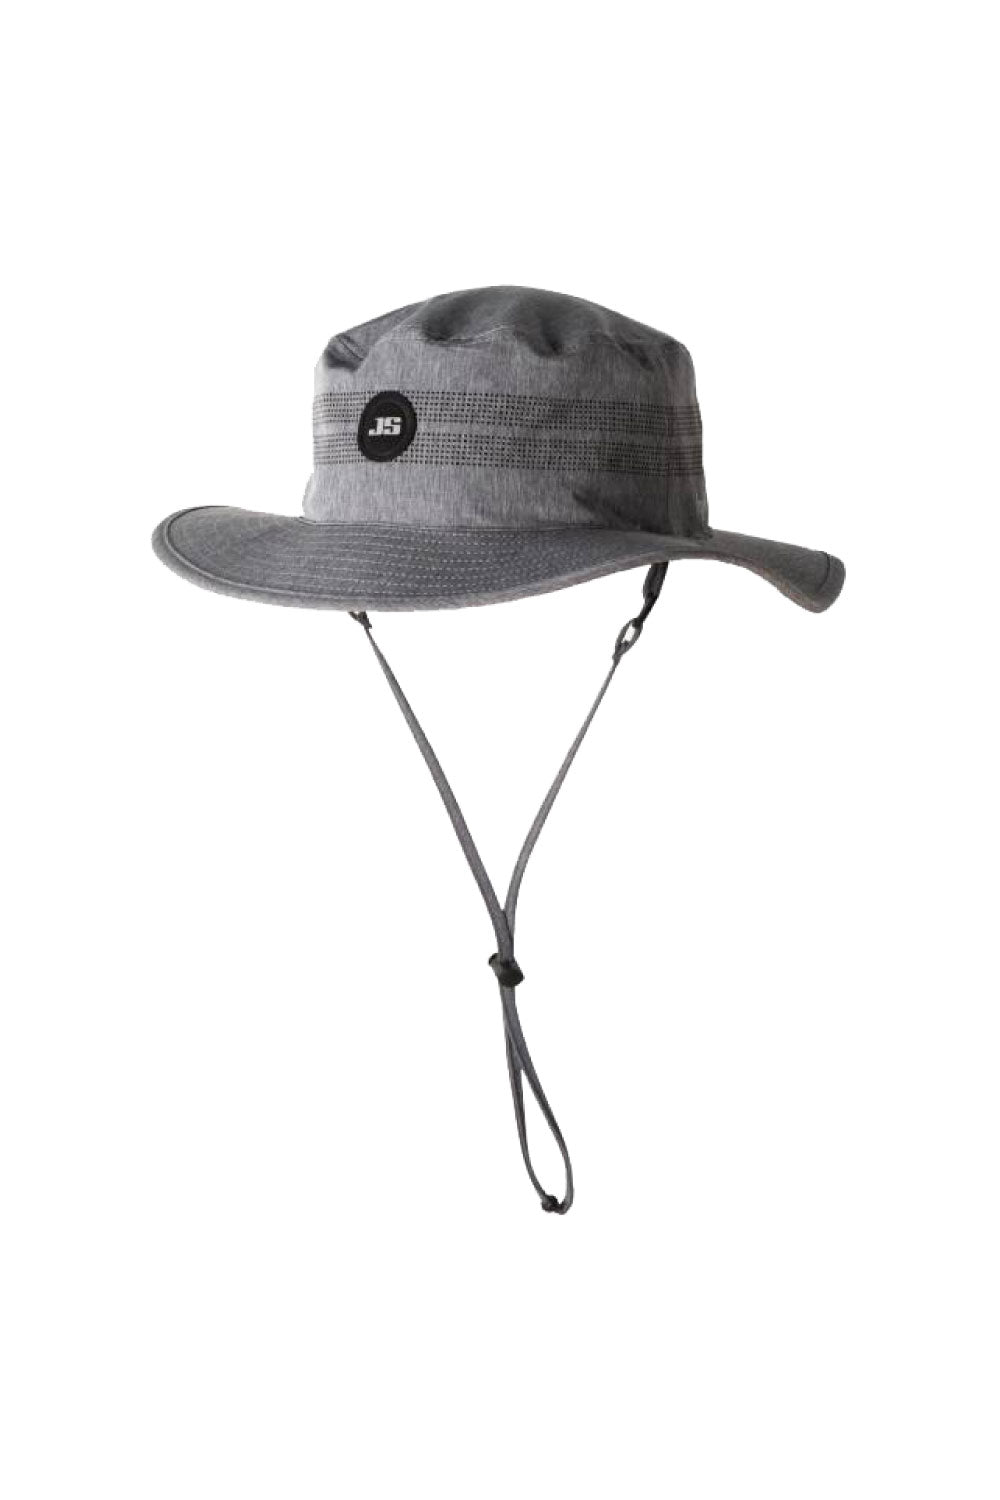 JS Industries HYFI Wide Brim Reversible Bucket Hat